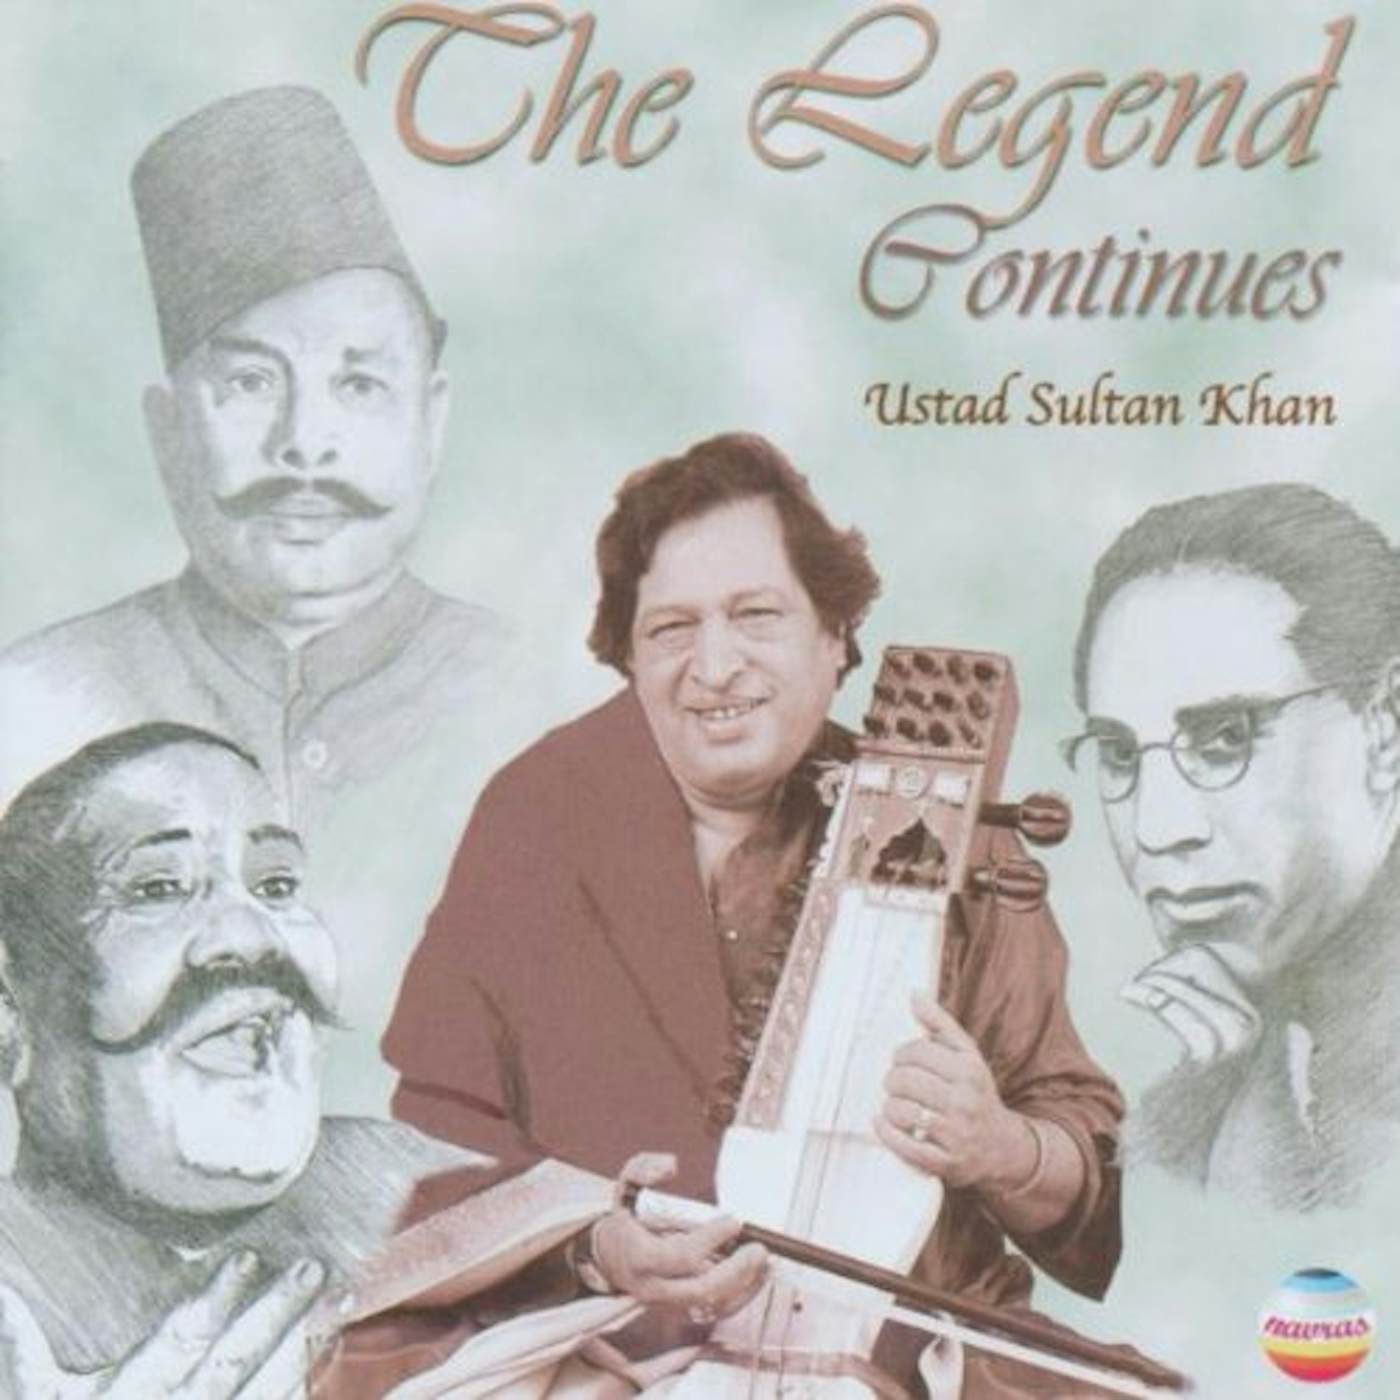 Sultan Khan LEGEND CONTINUES CD